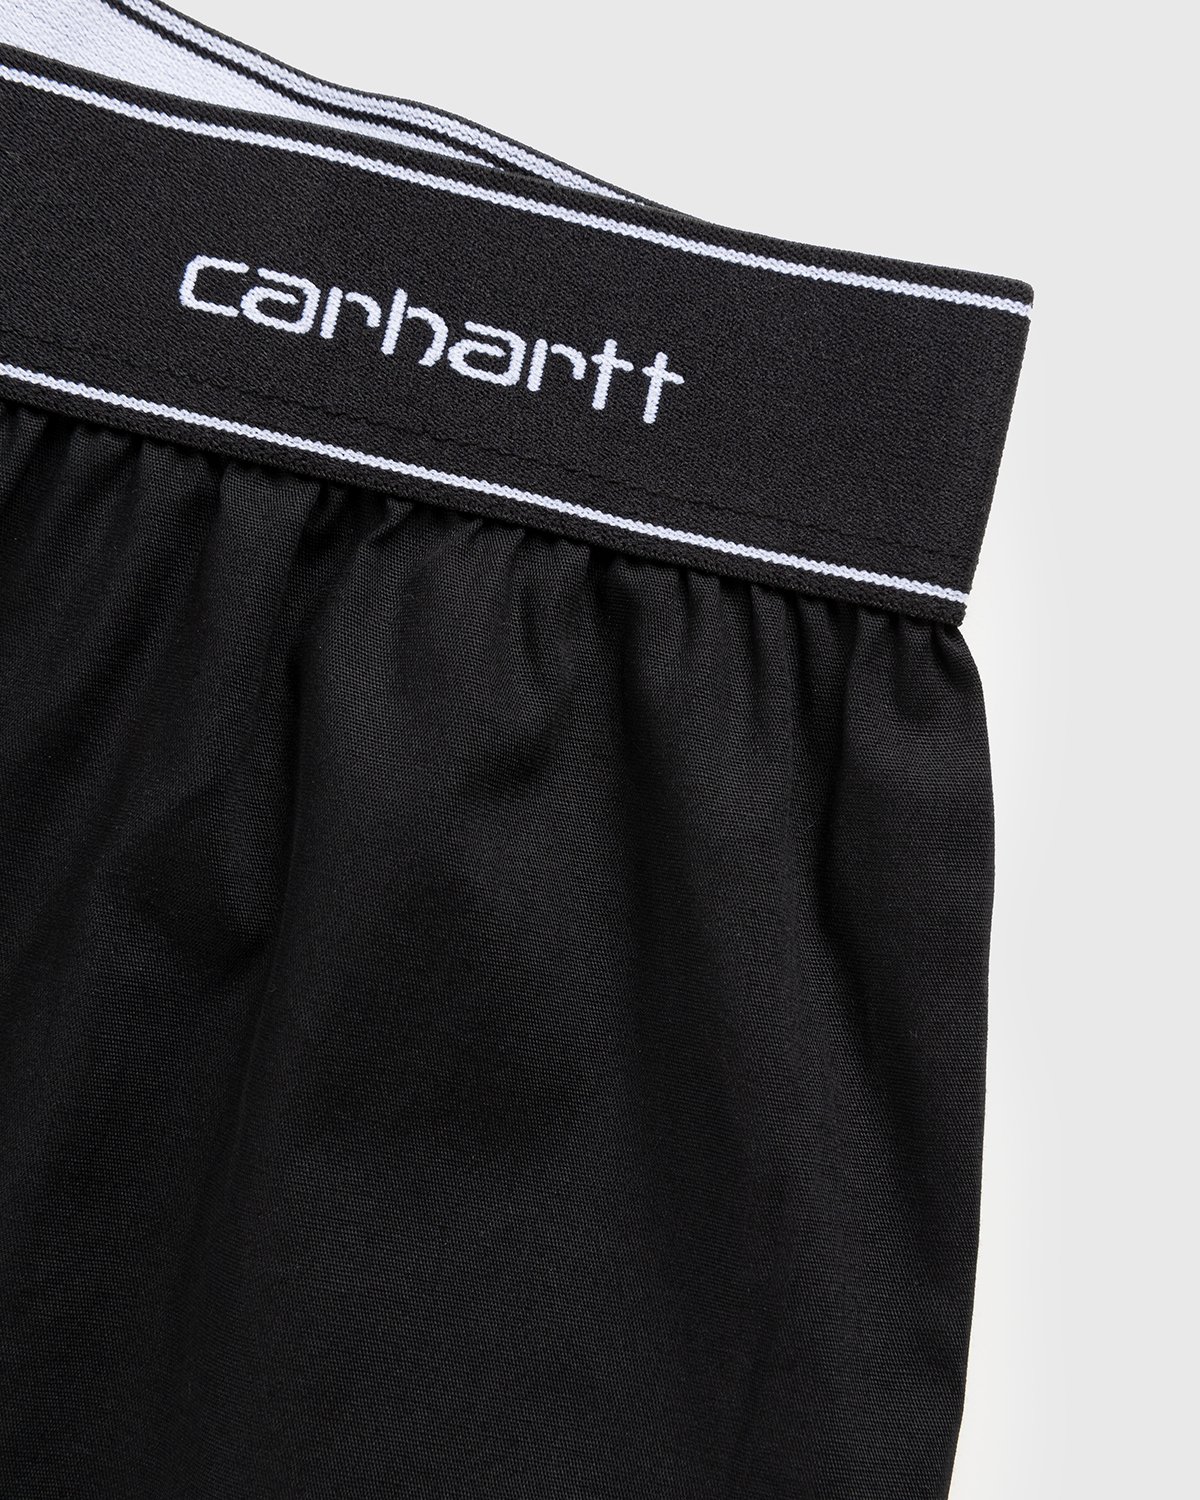 Carhartt WIP - Cotton Script Boxers Black - Clothing - Black - Image 3